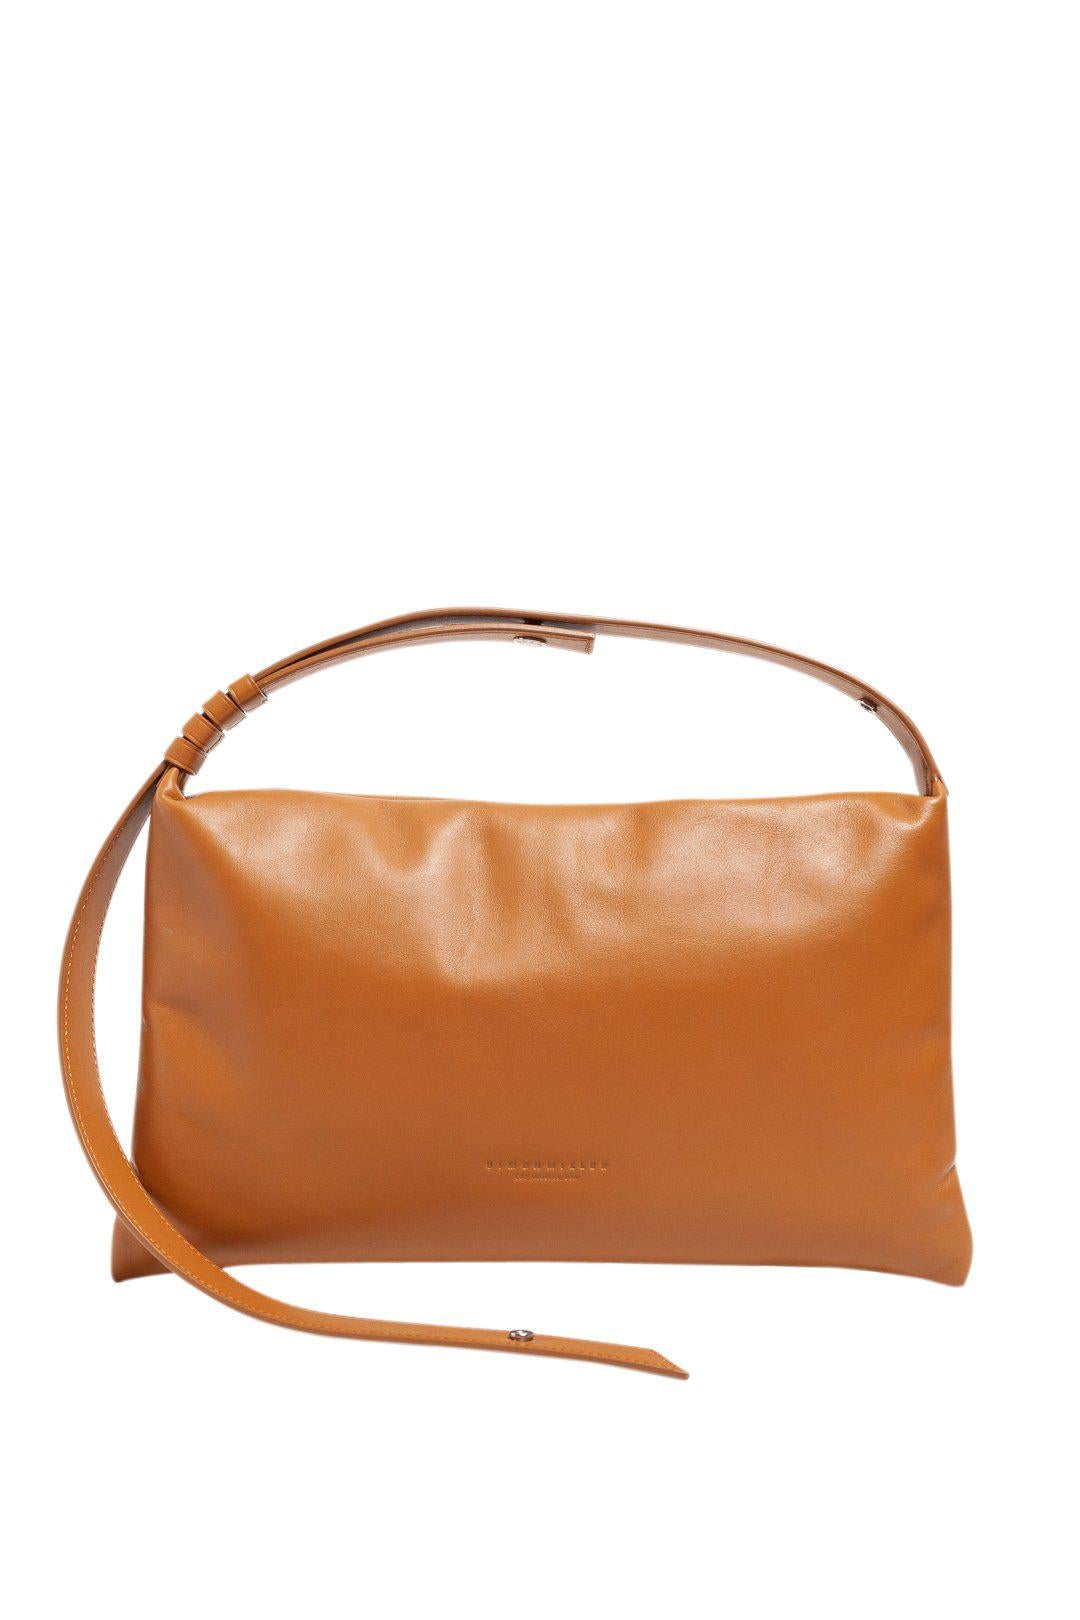 Puffin leather handbag